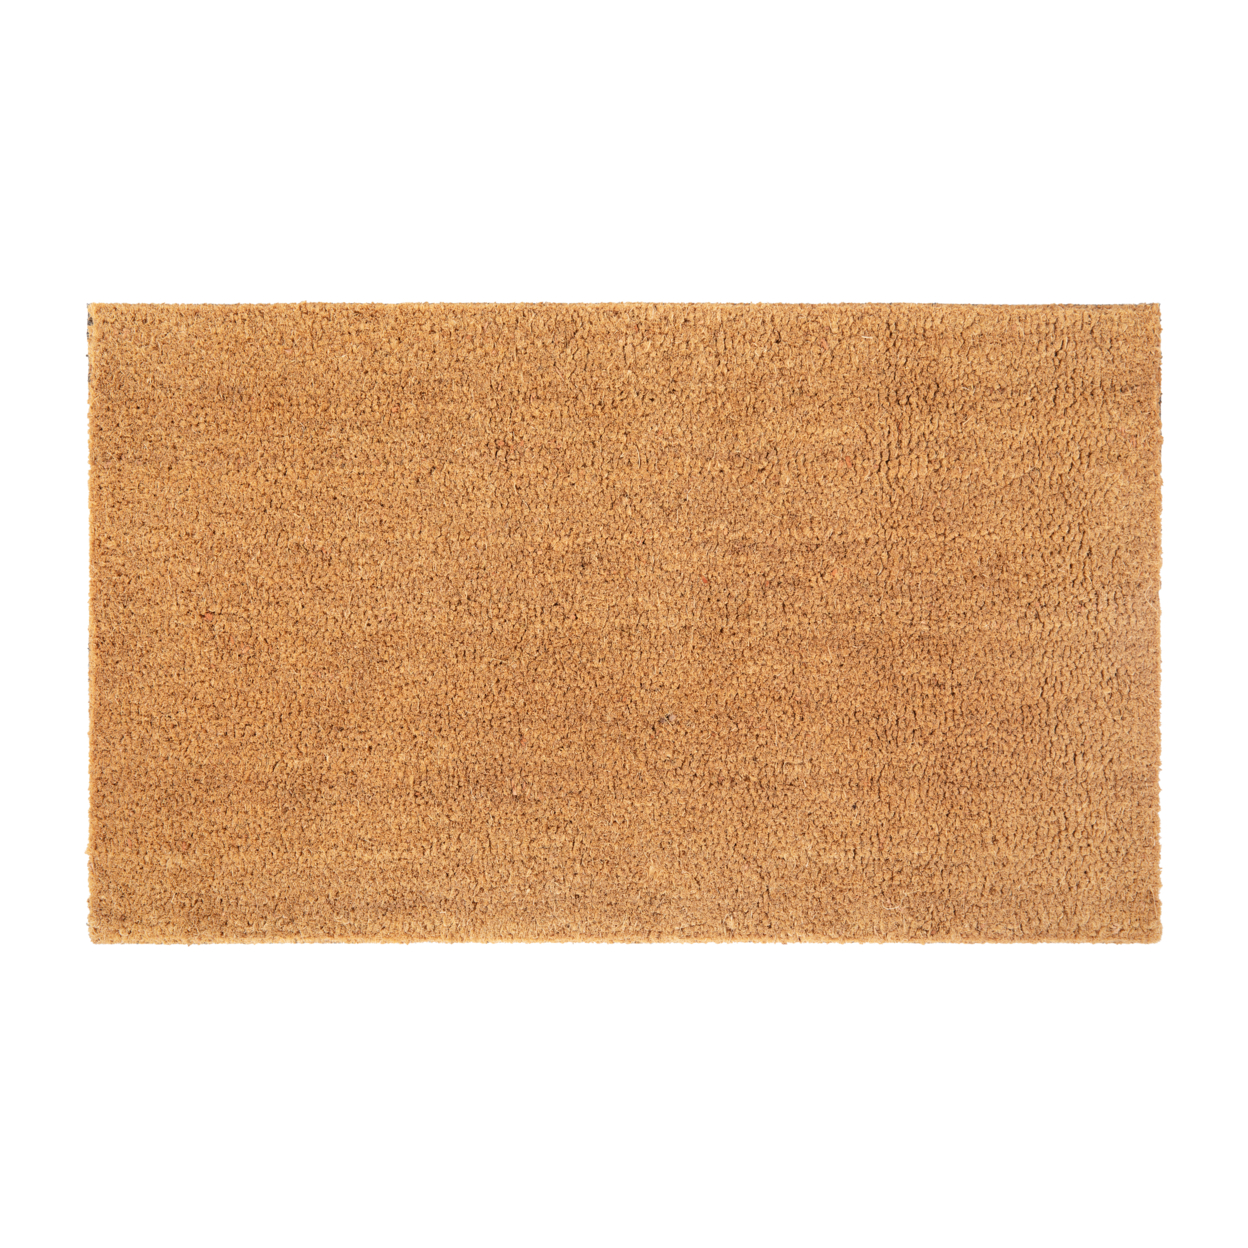 18x30 Natural Coir Doormat